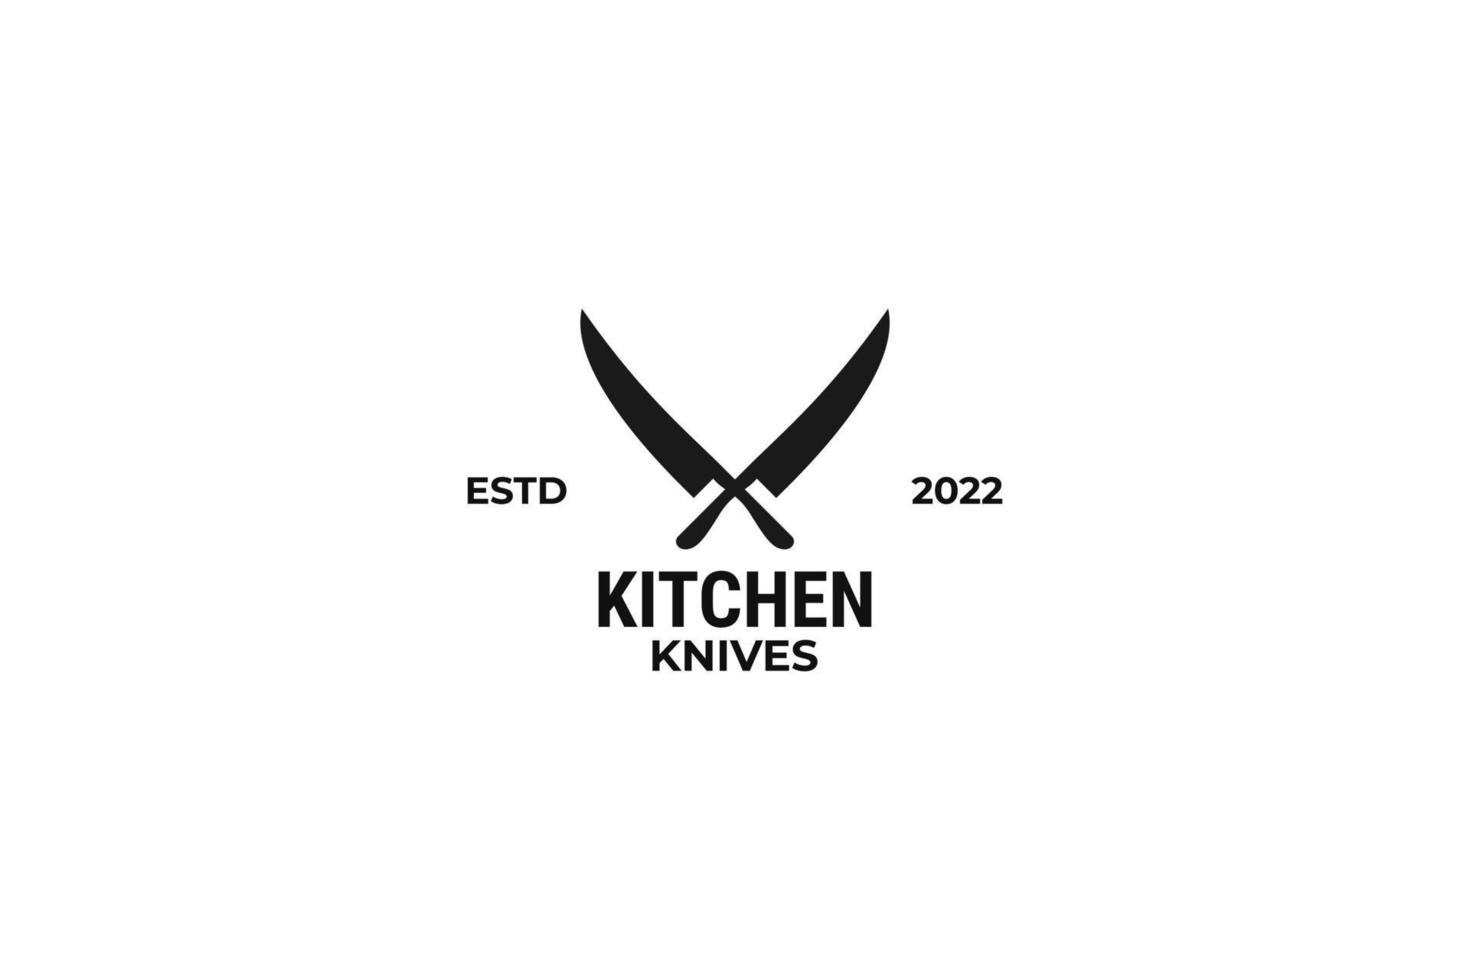 Cross kitchen knives and chef knife logo vector illustration design